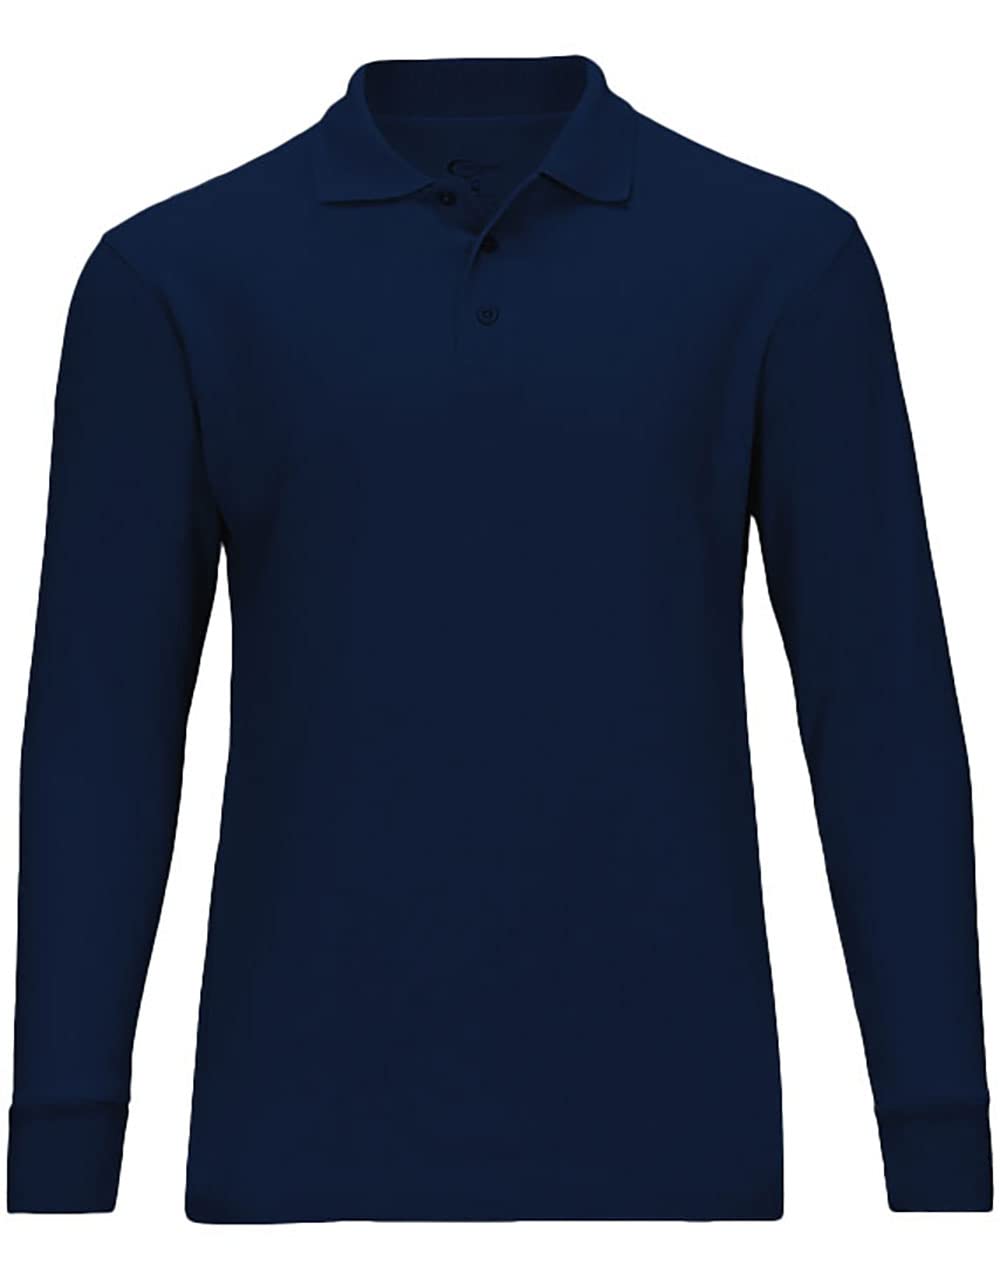 Premium Wear Mens Long Sleeve Polo Shirts - Stain Guard Polo Shirts For Men - Navy - Medium